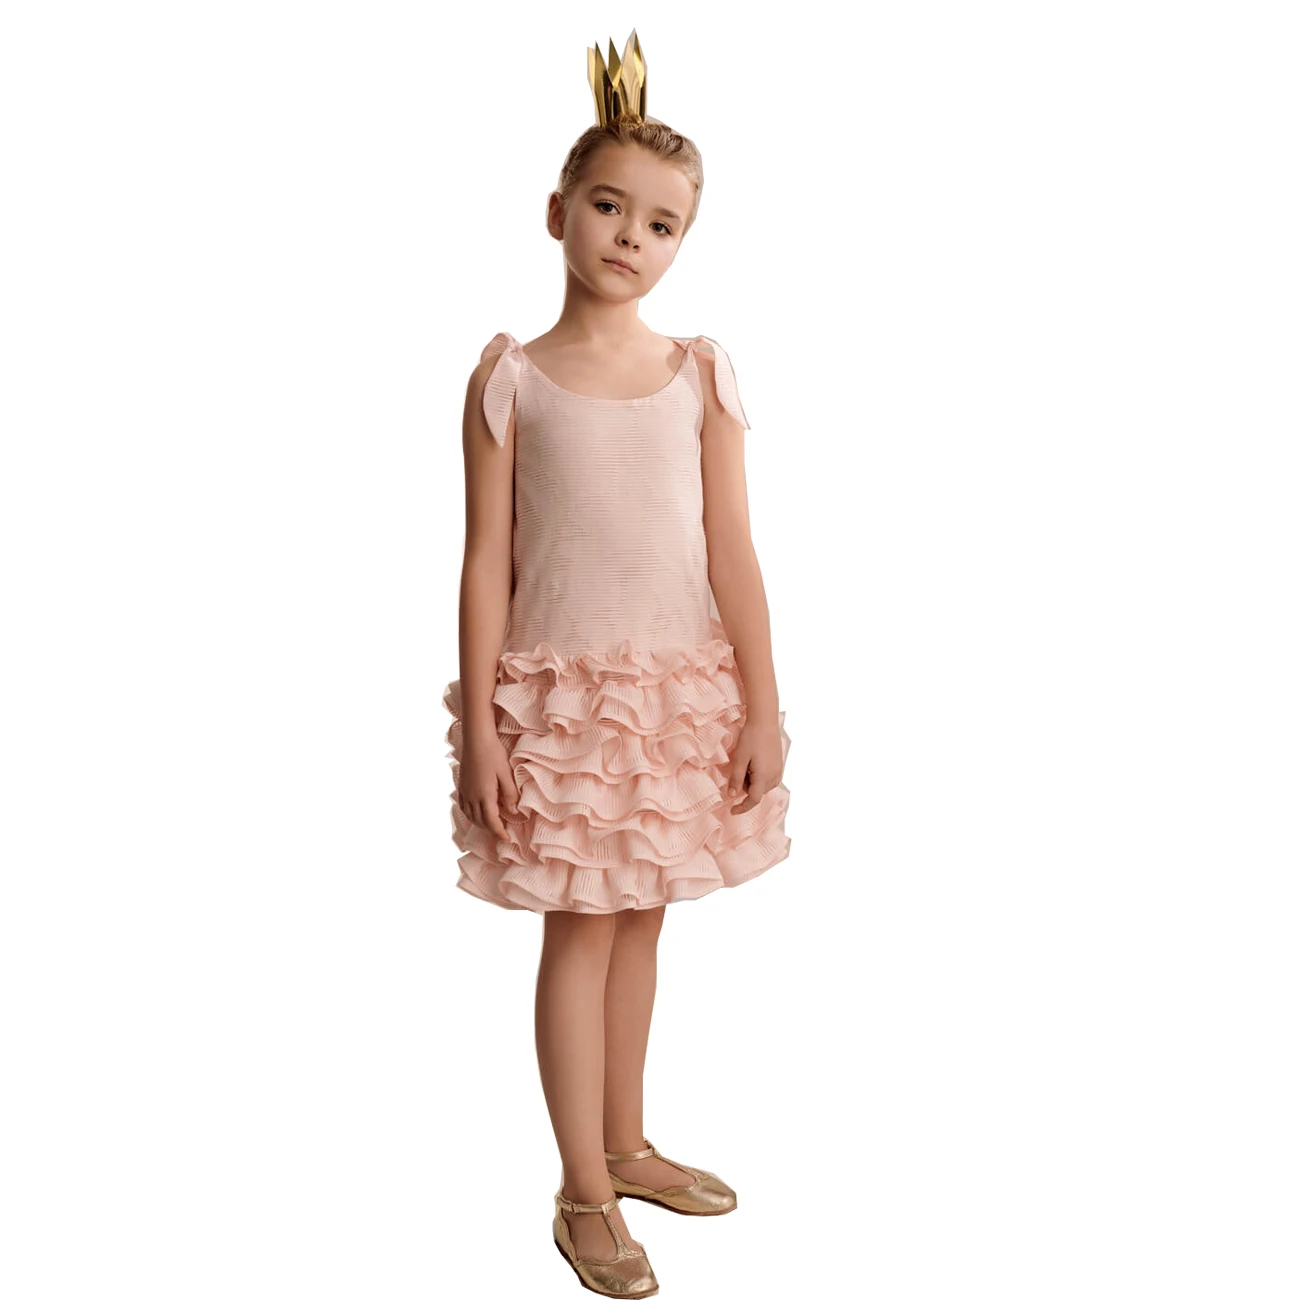 Fashion children clothes customized baby girls dresses summer sleeveless girl child dress